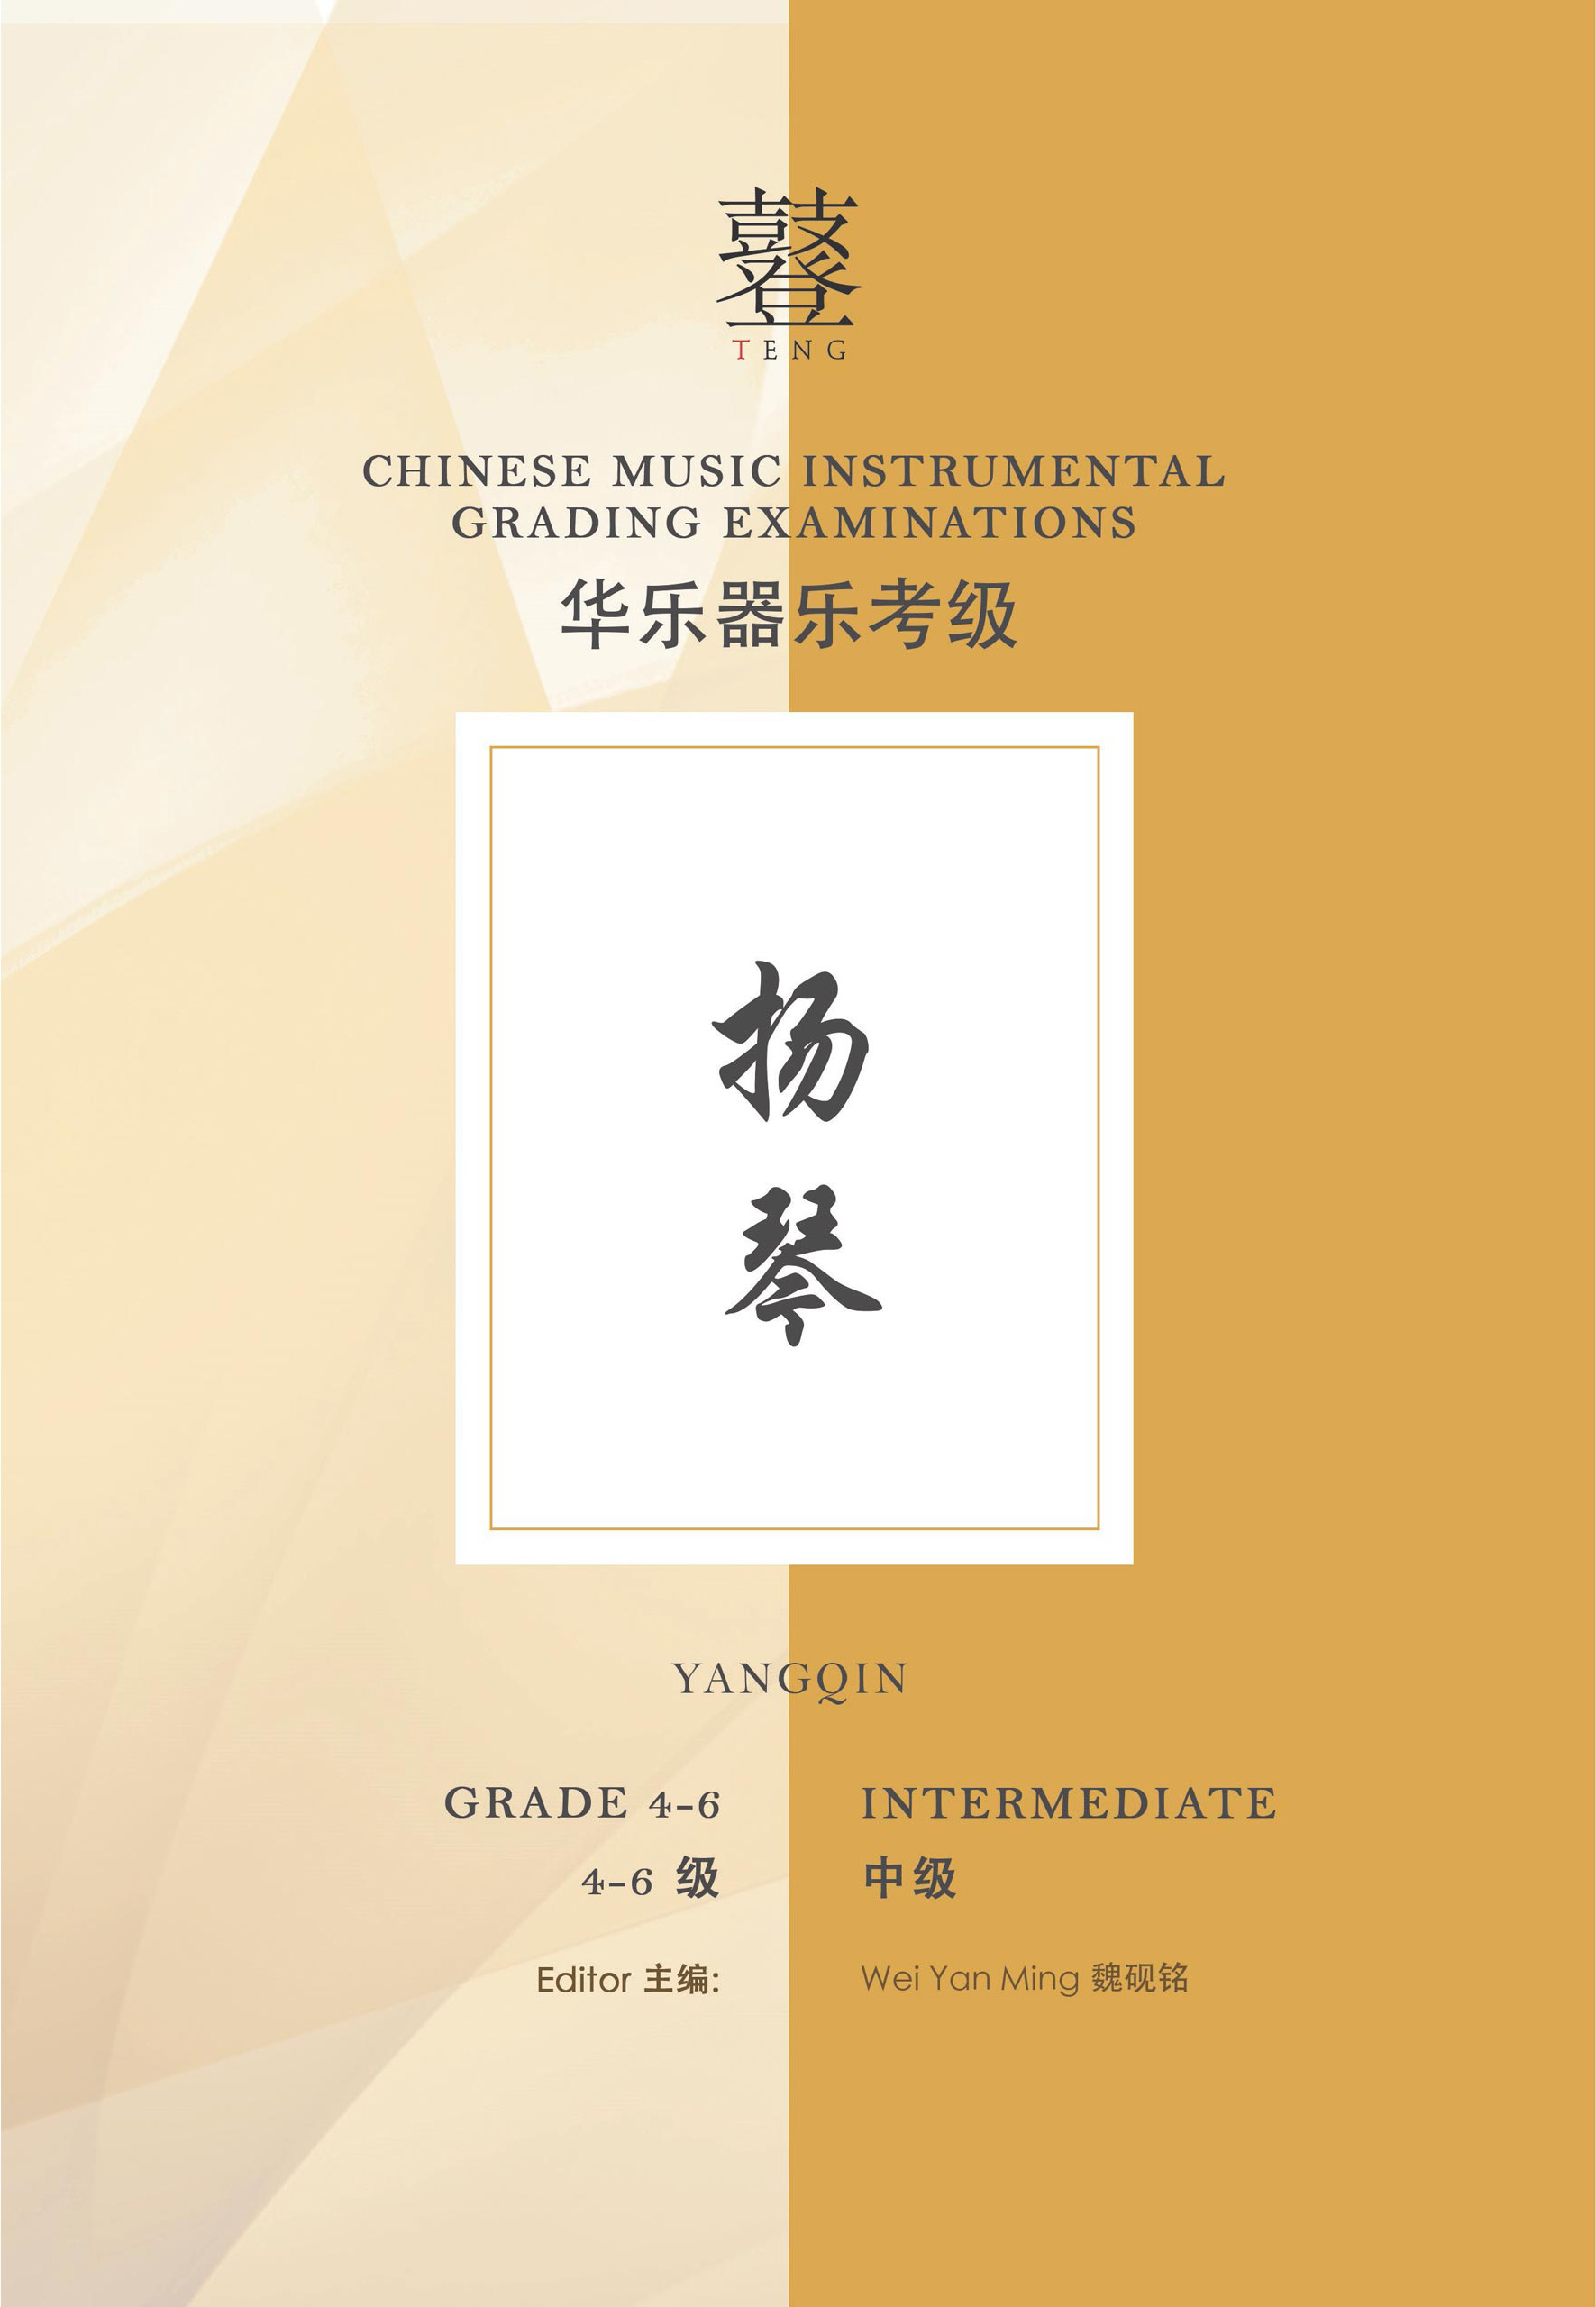 Yangqin Grading Examination Book by Teng (Intermediate Grade 4-6) featured photo